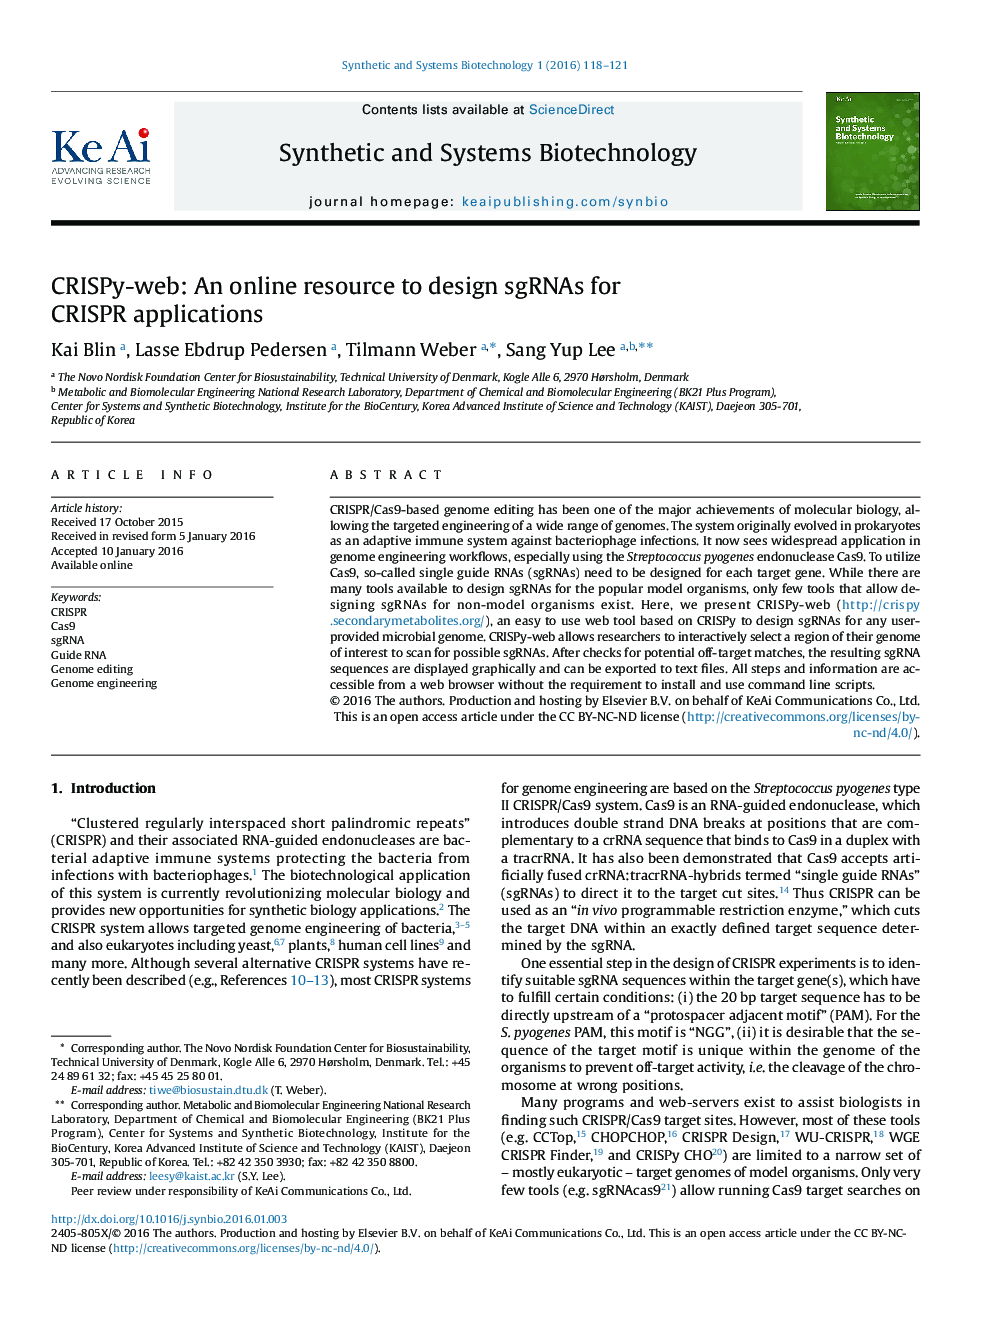 CRISPy-web: منابع آنلاین برای طراحی sgRNAs برای برنامه های CRISPR